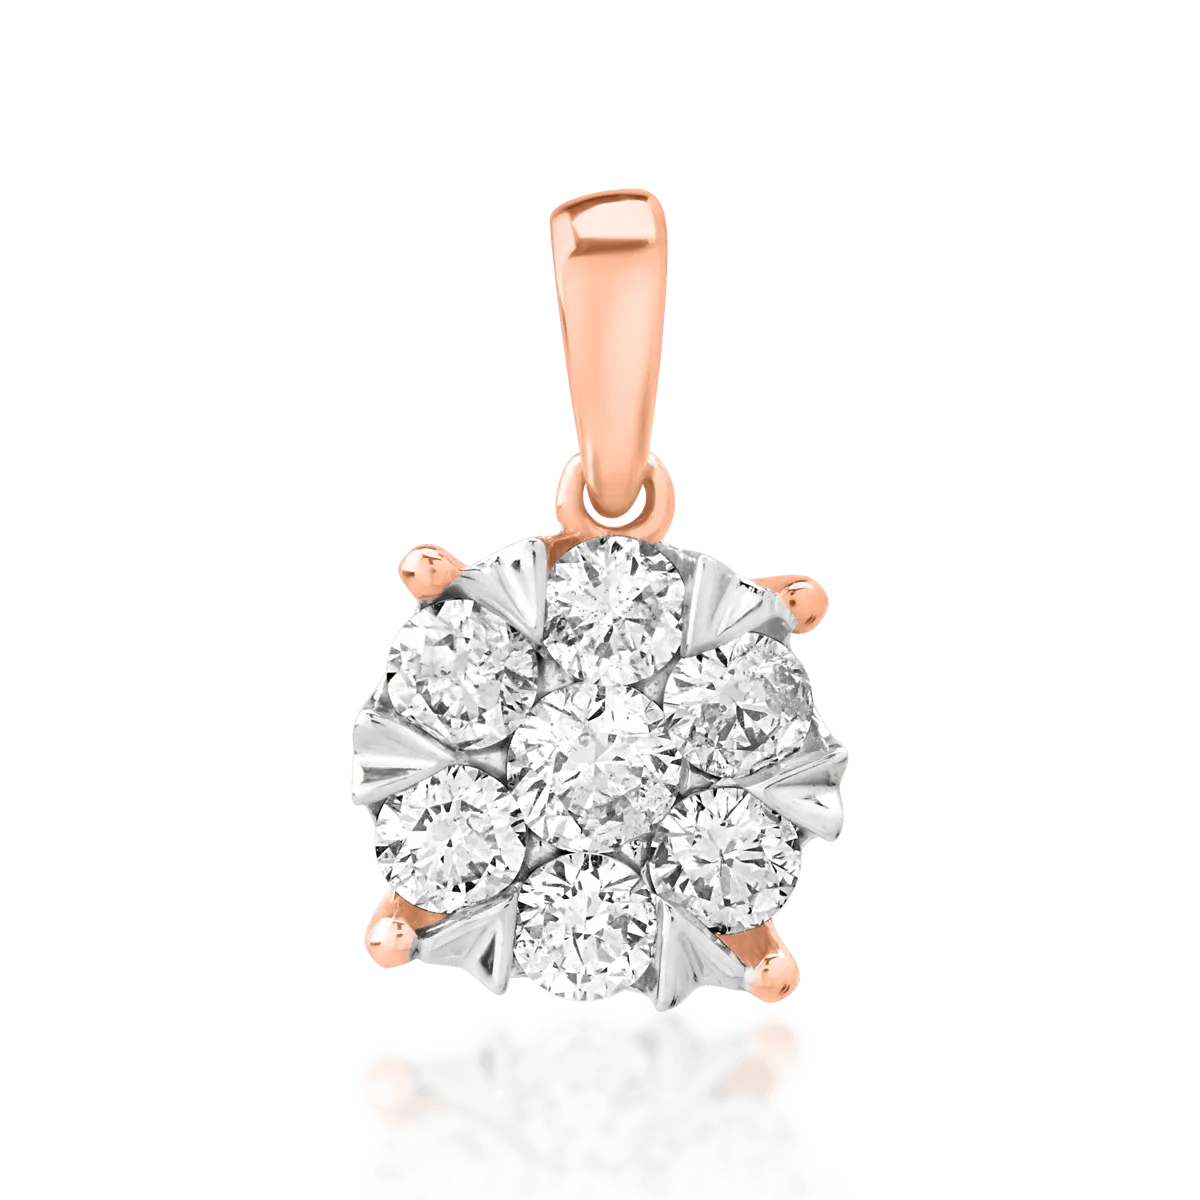 18K rose gold pendant with 0.2ct diamonds